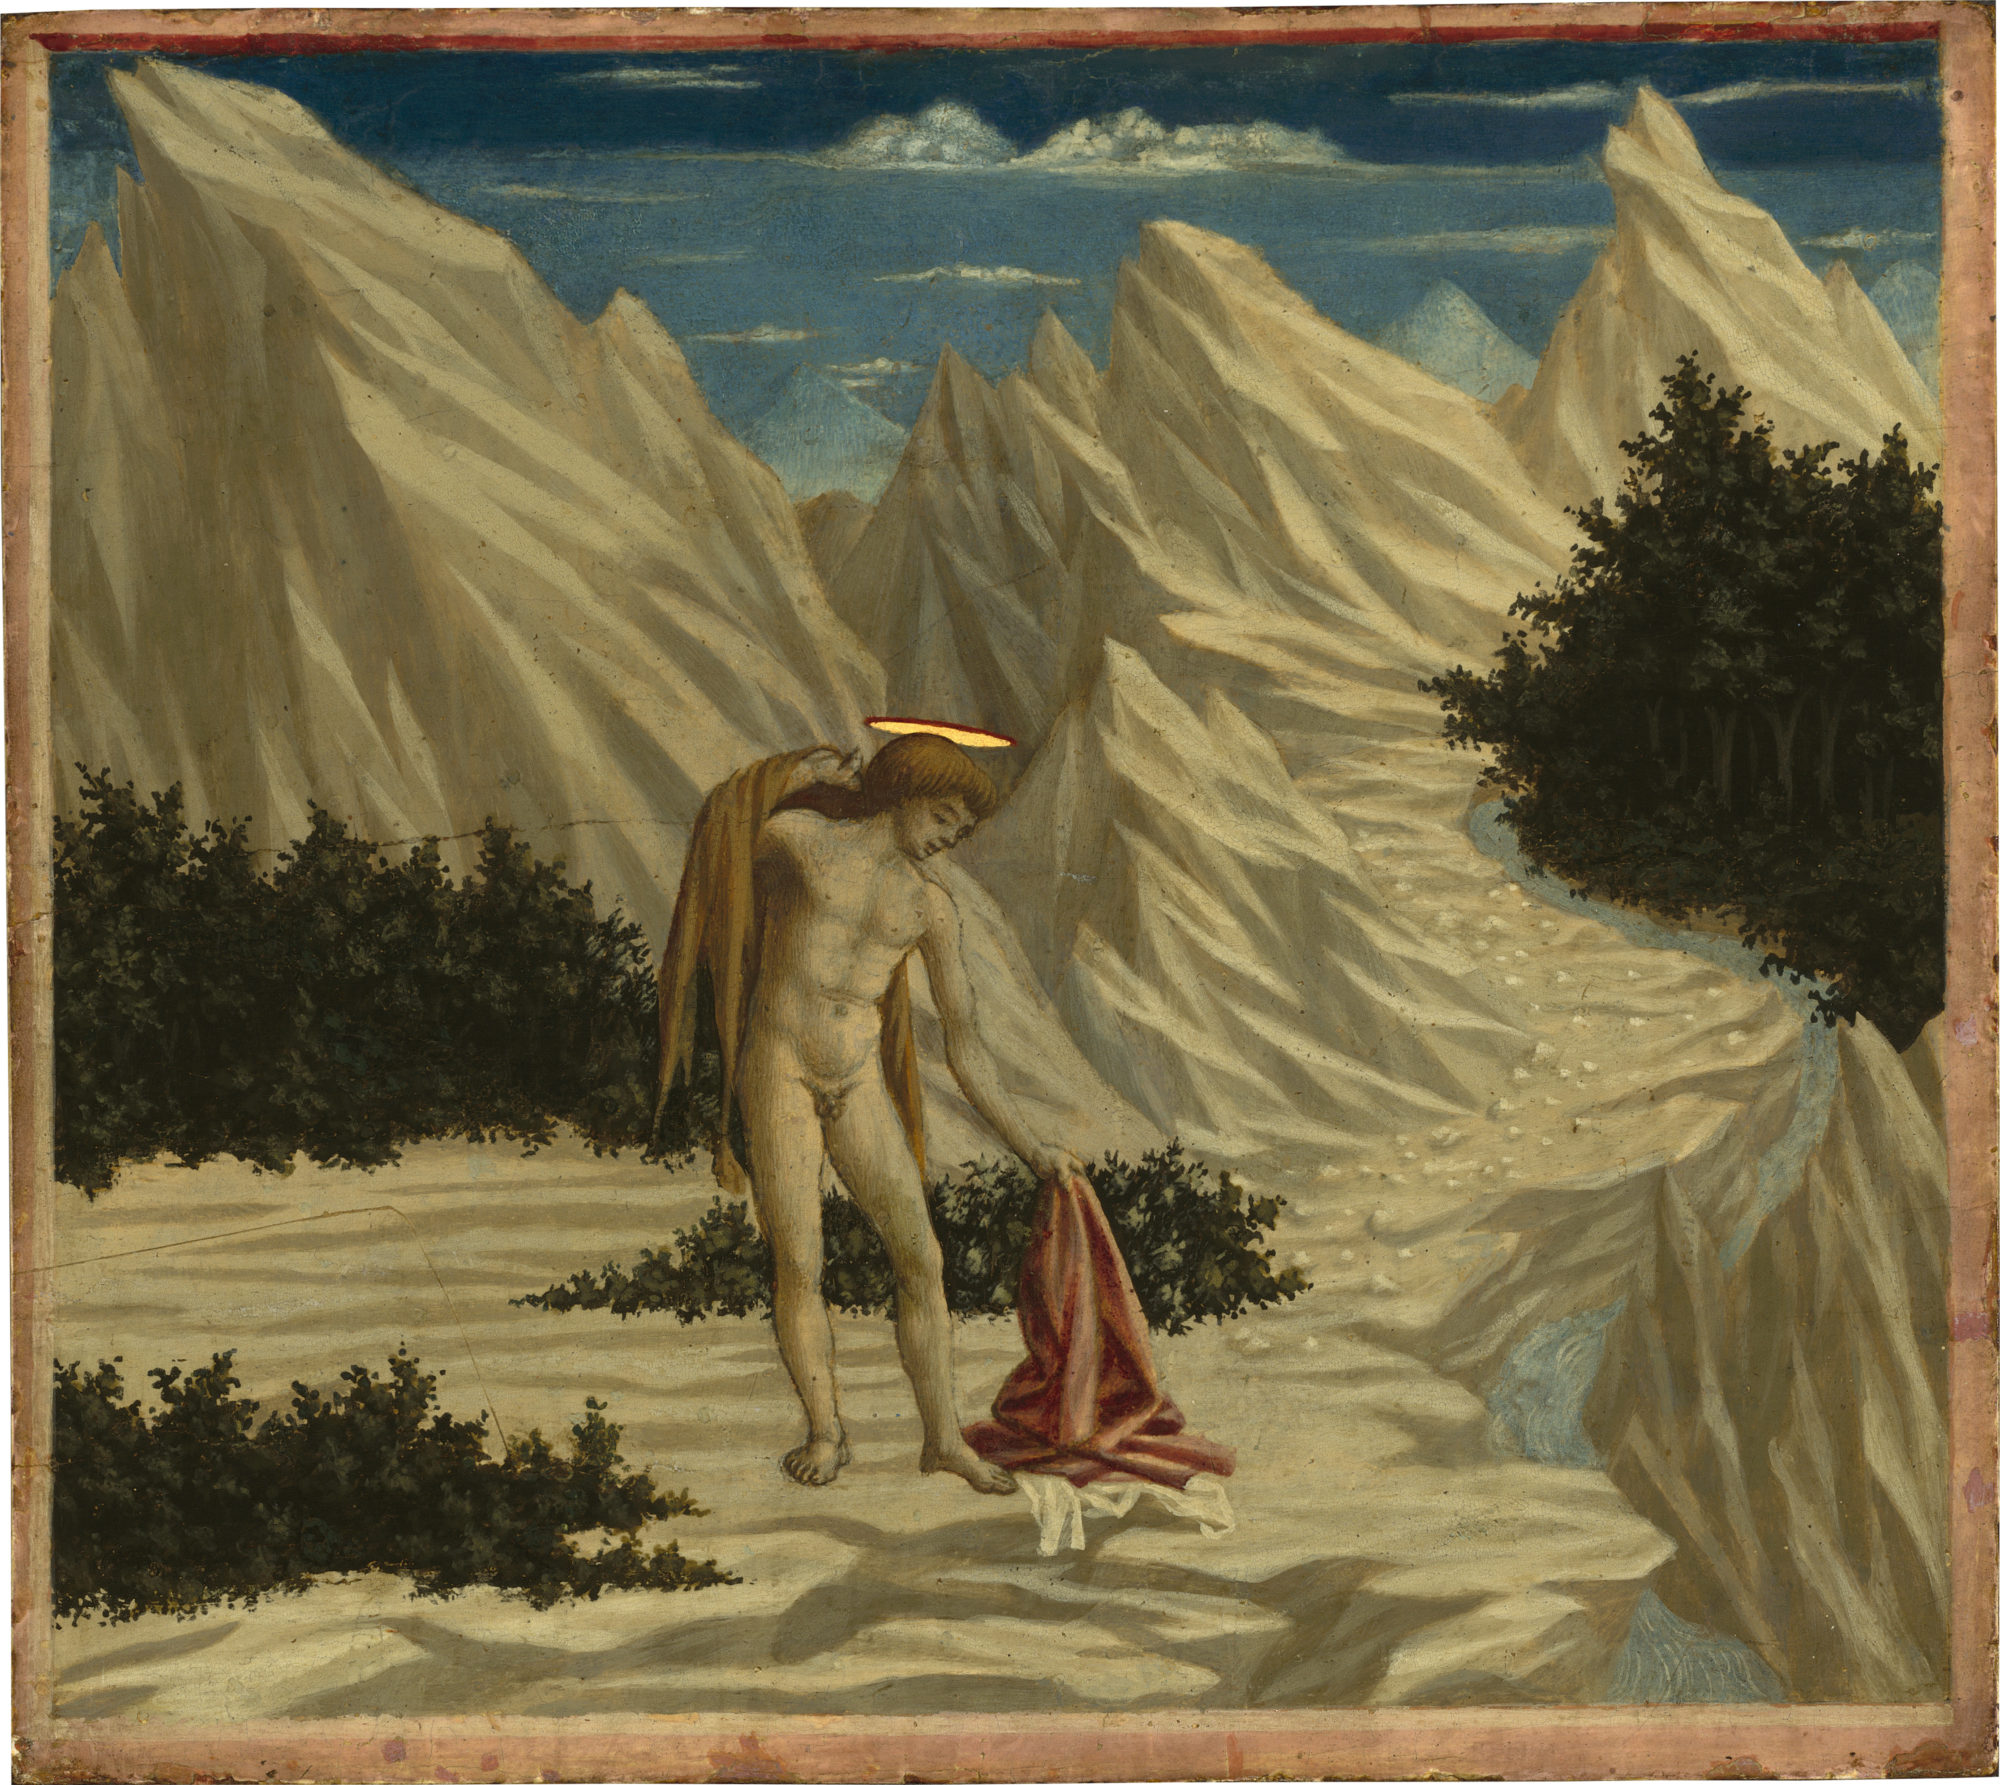 Domenico Veneziano painting of a nude Saint John lifting clothing in a mountainous desert